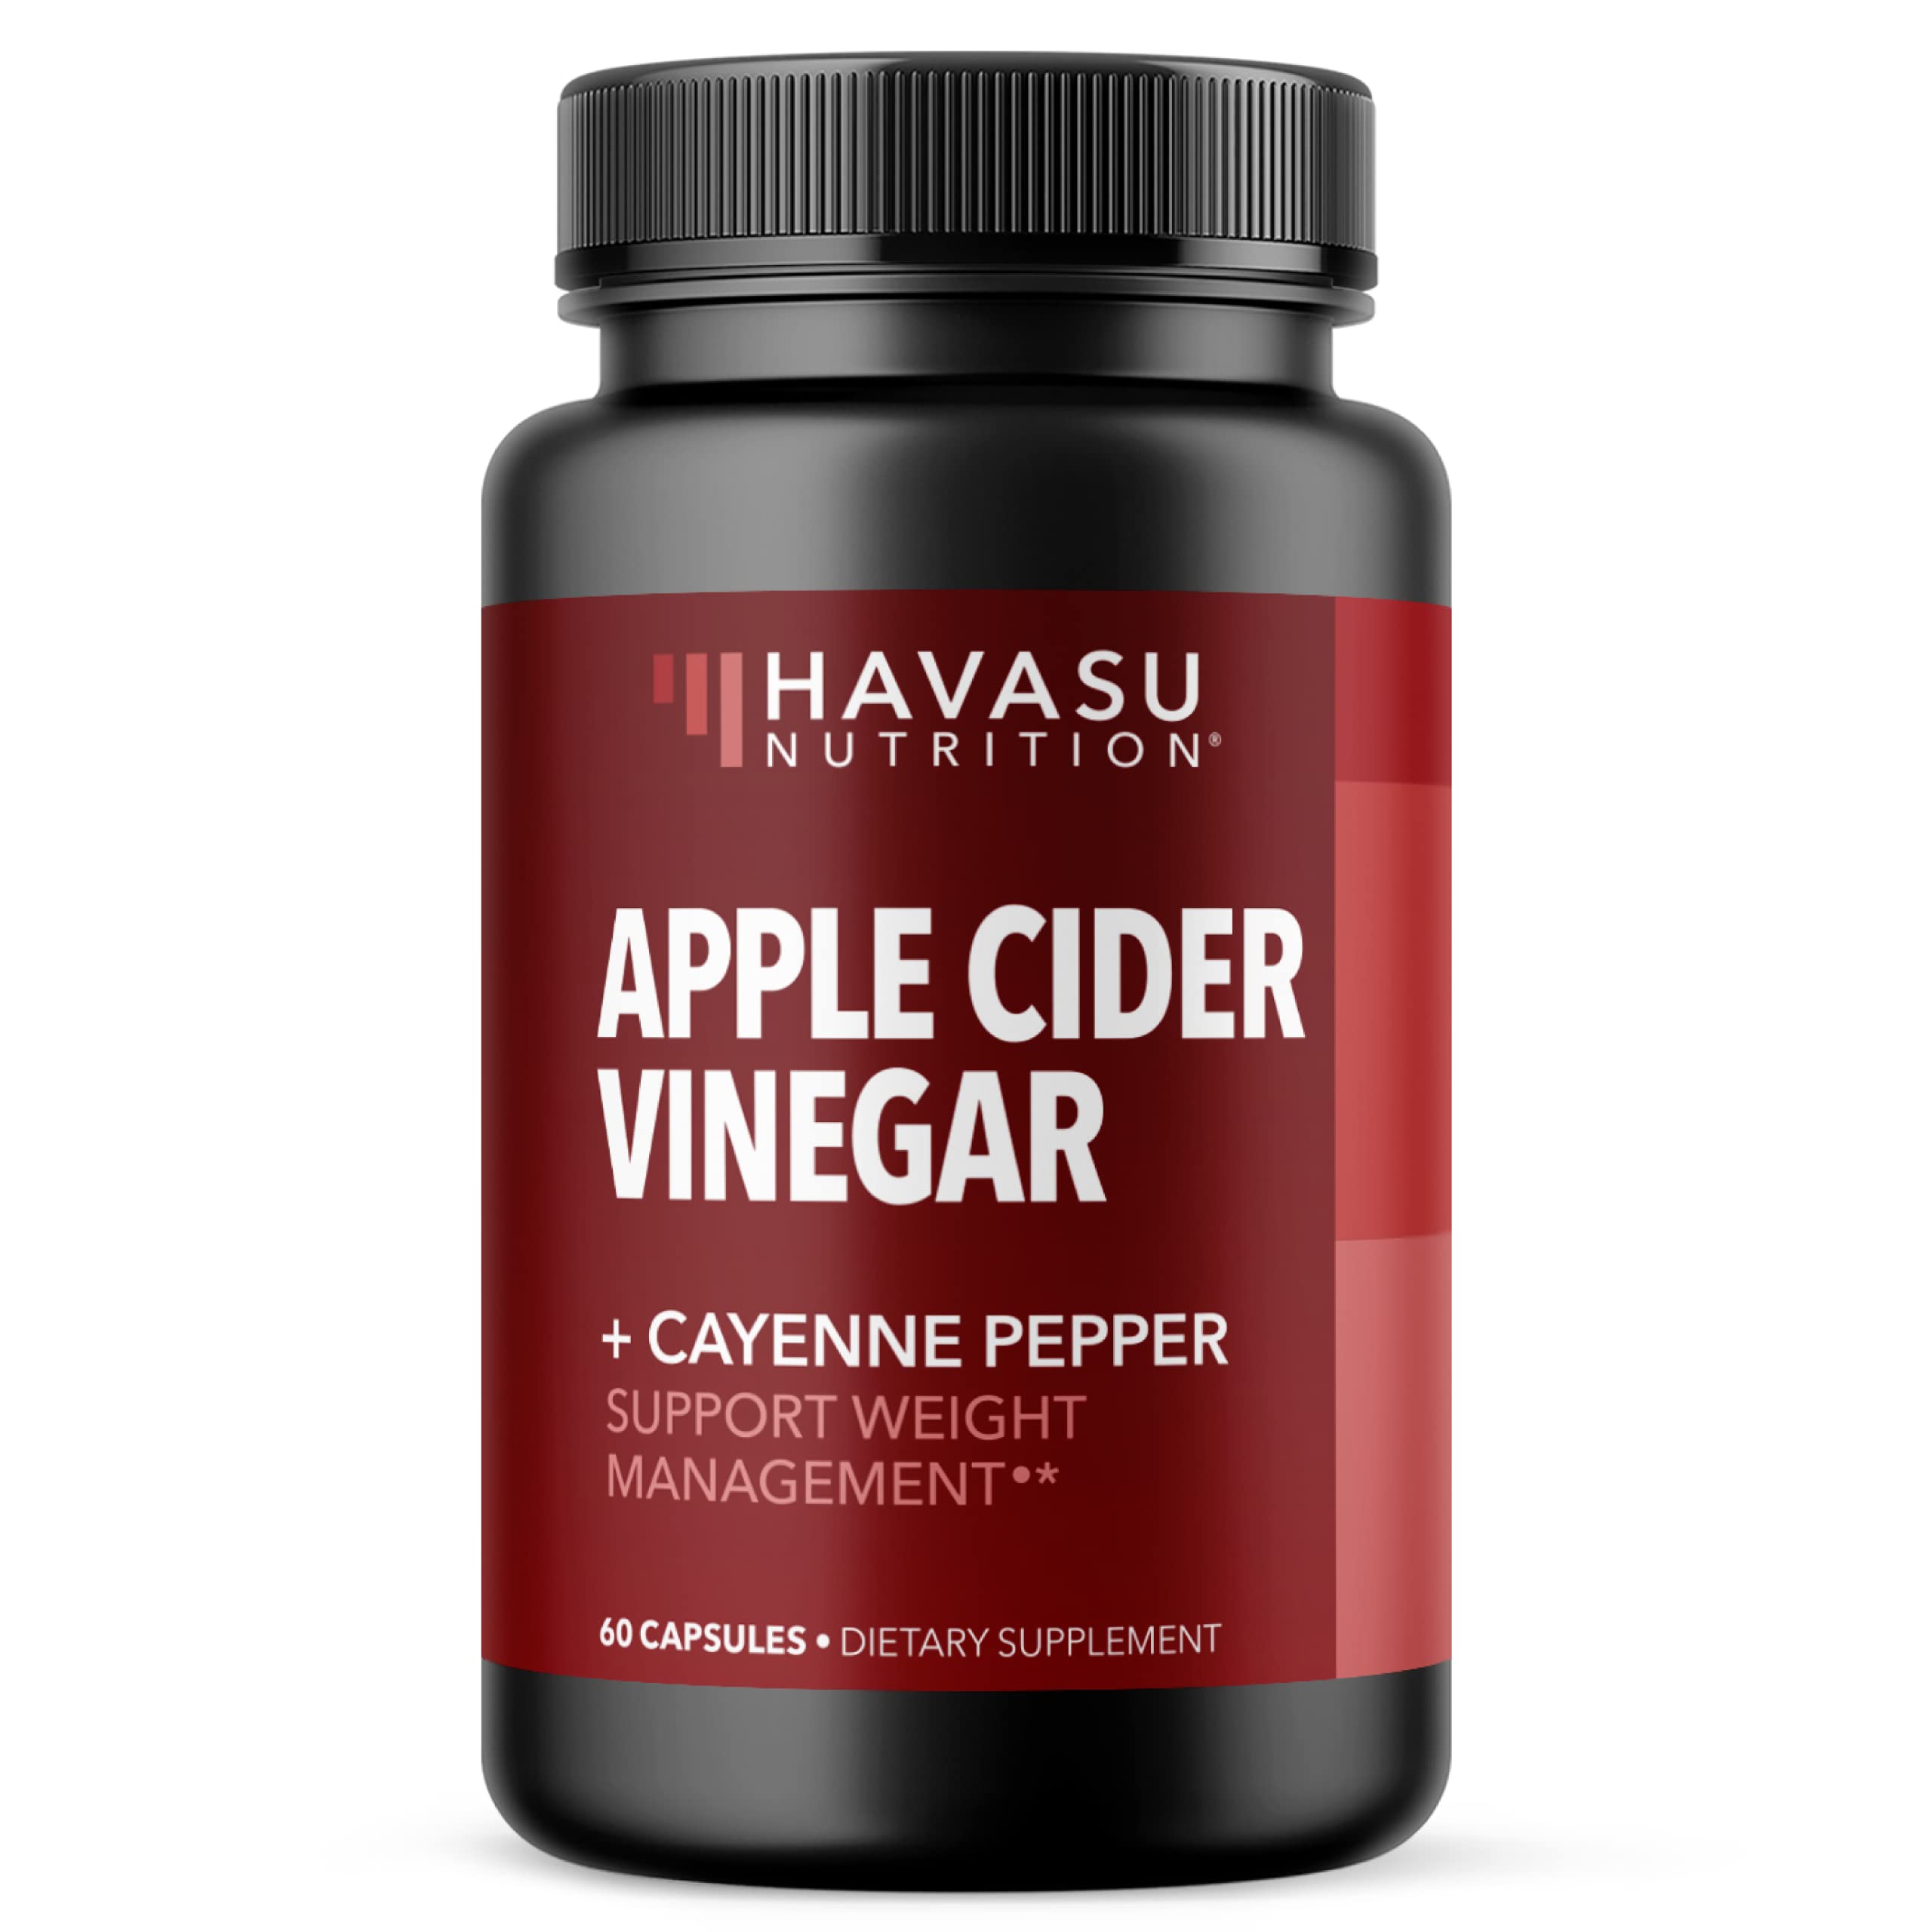 HAVASU NUTRITION Apple Cider Vinegar Capsules with 500mg Apple Cider Vinegar and 20mg Cayenne Pepper per Serving for Bloating Relief (60 Count, 1 Pack)